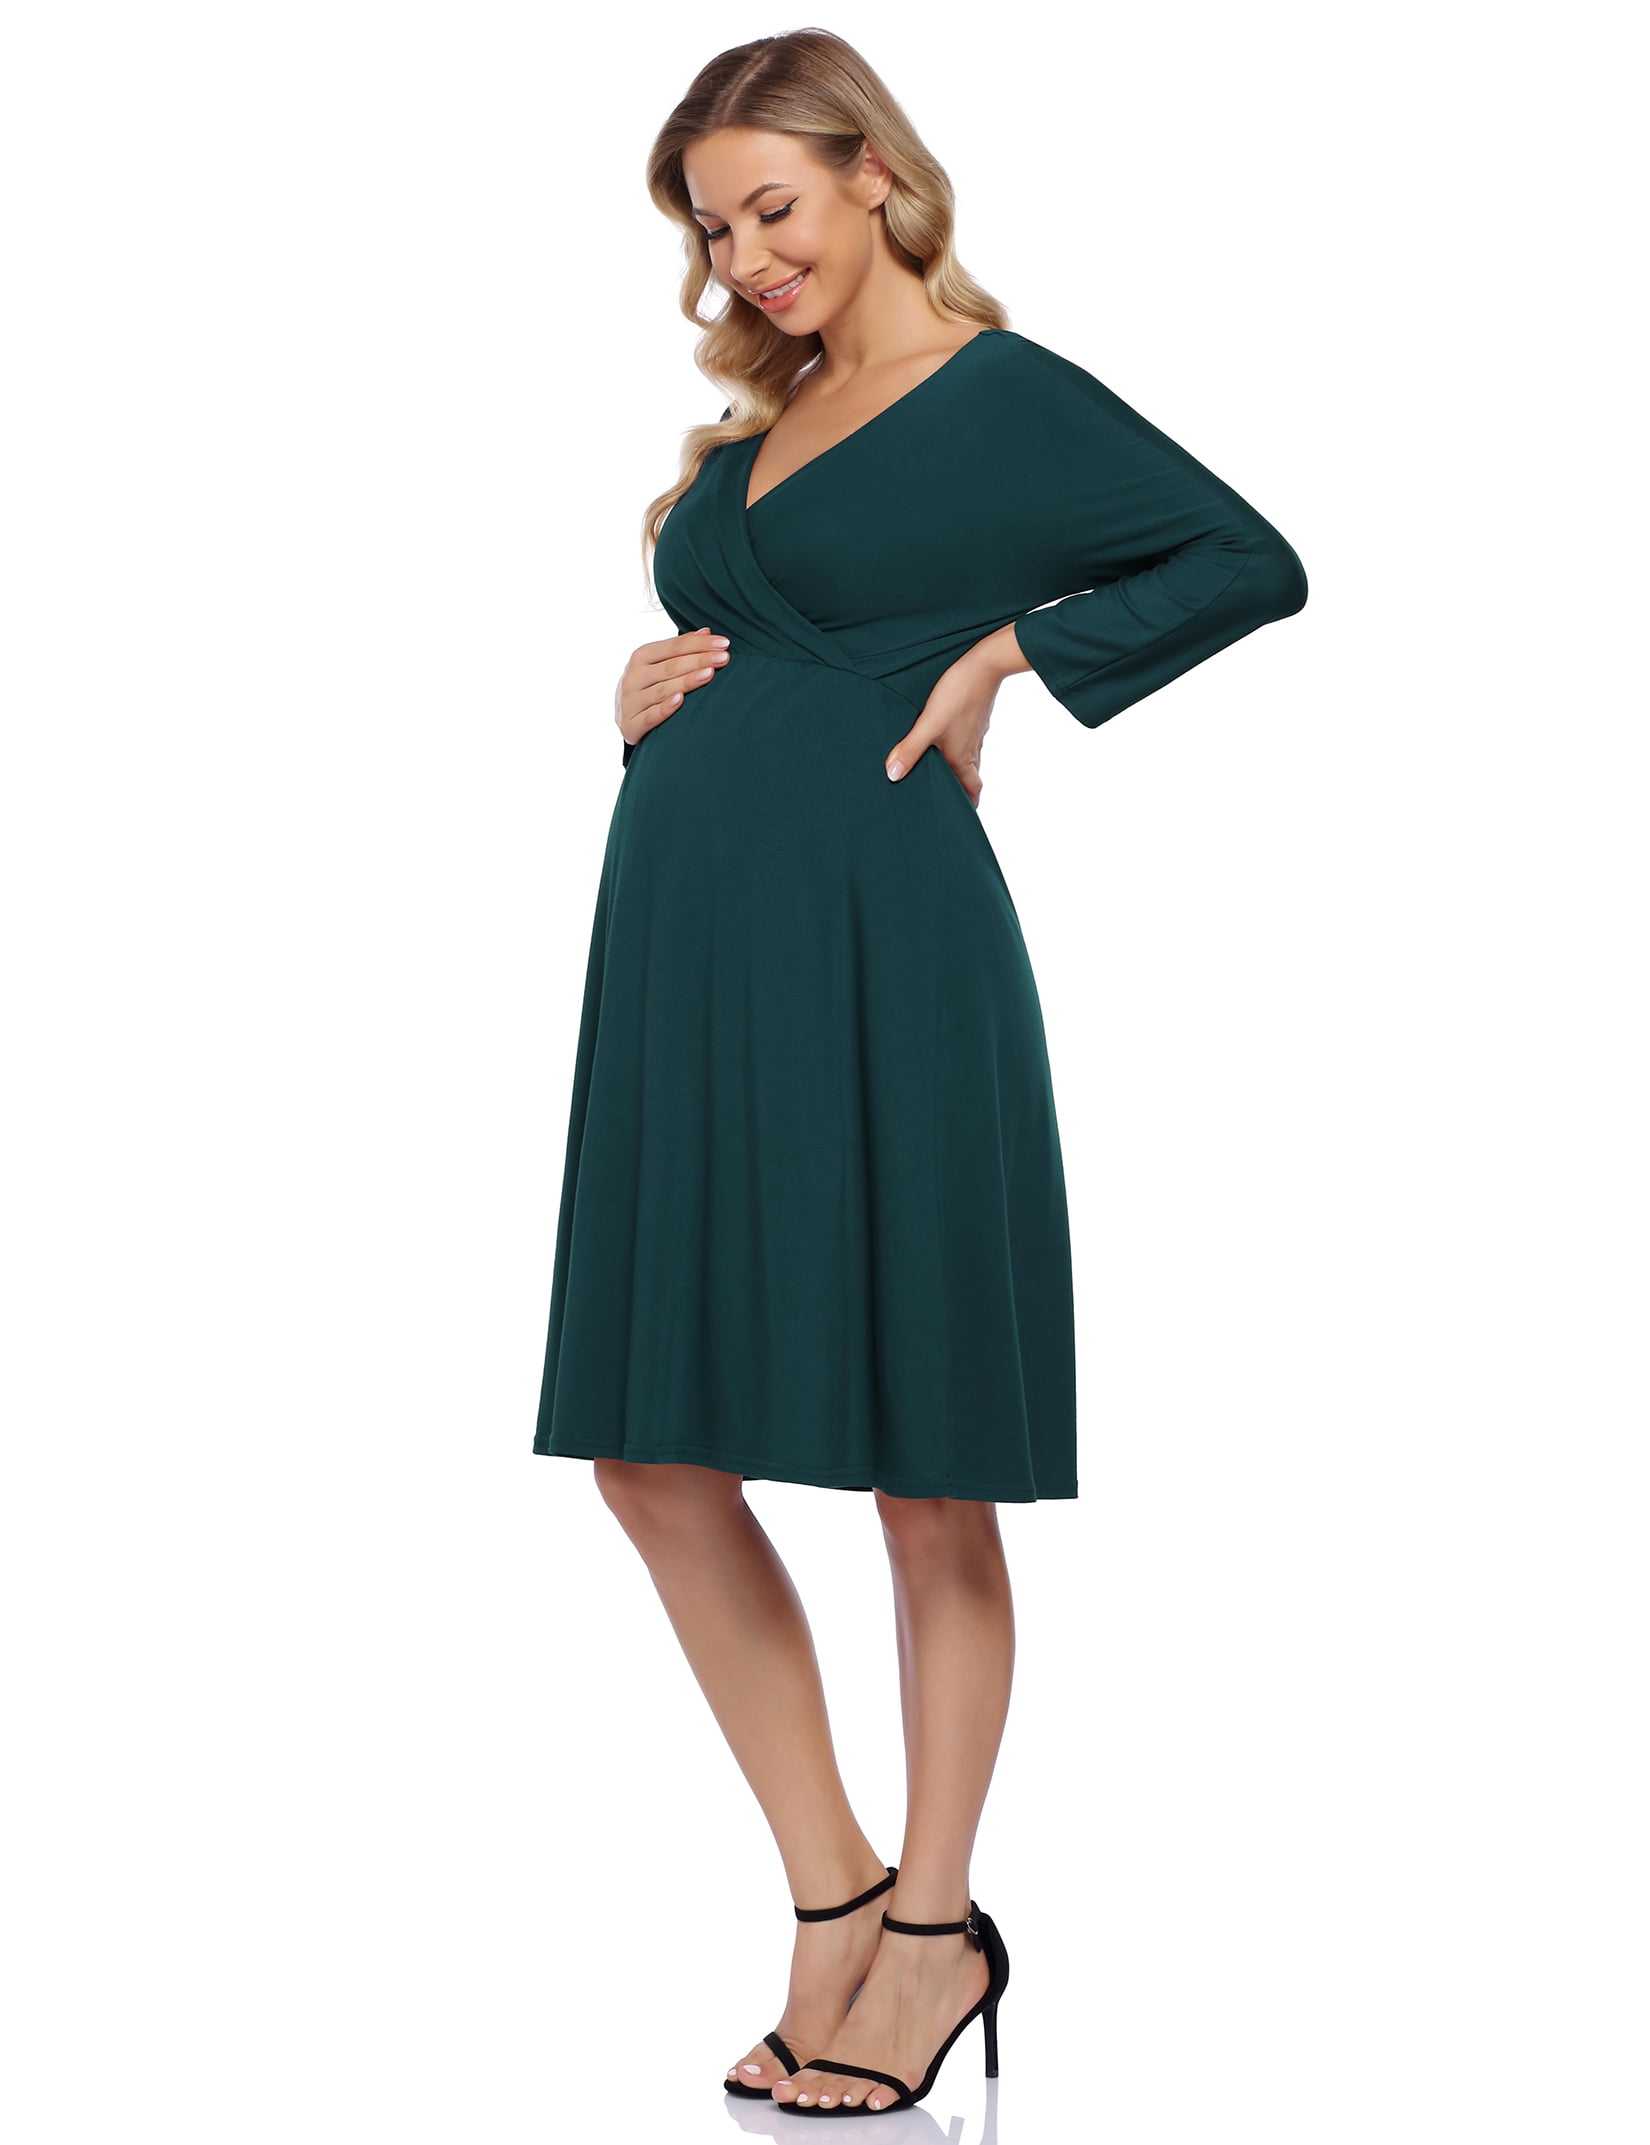 Oyang Maternity Dress Women's V-Neck A-Line Knee Length Wrap Dress